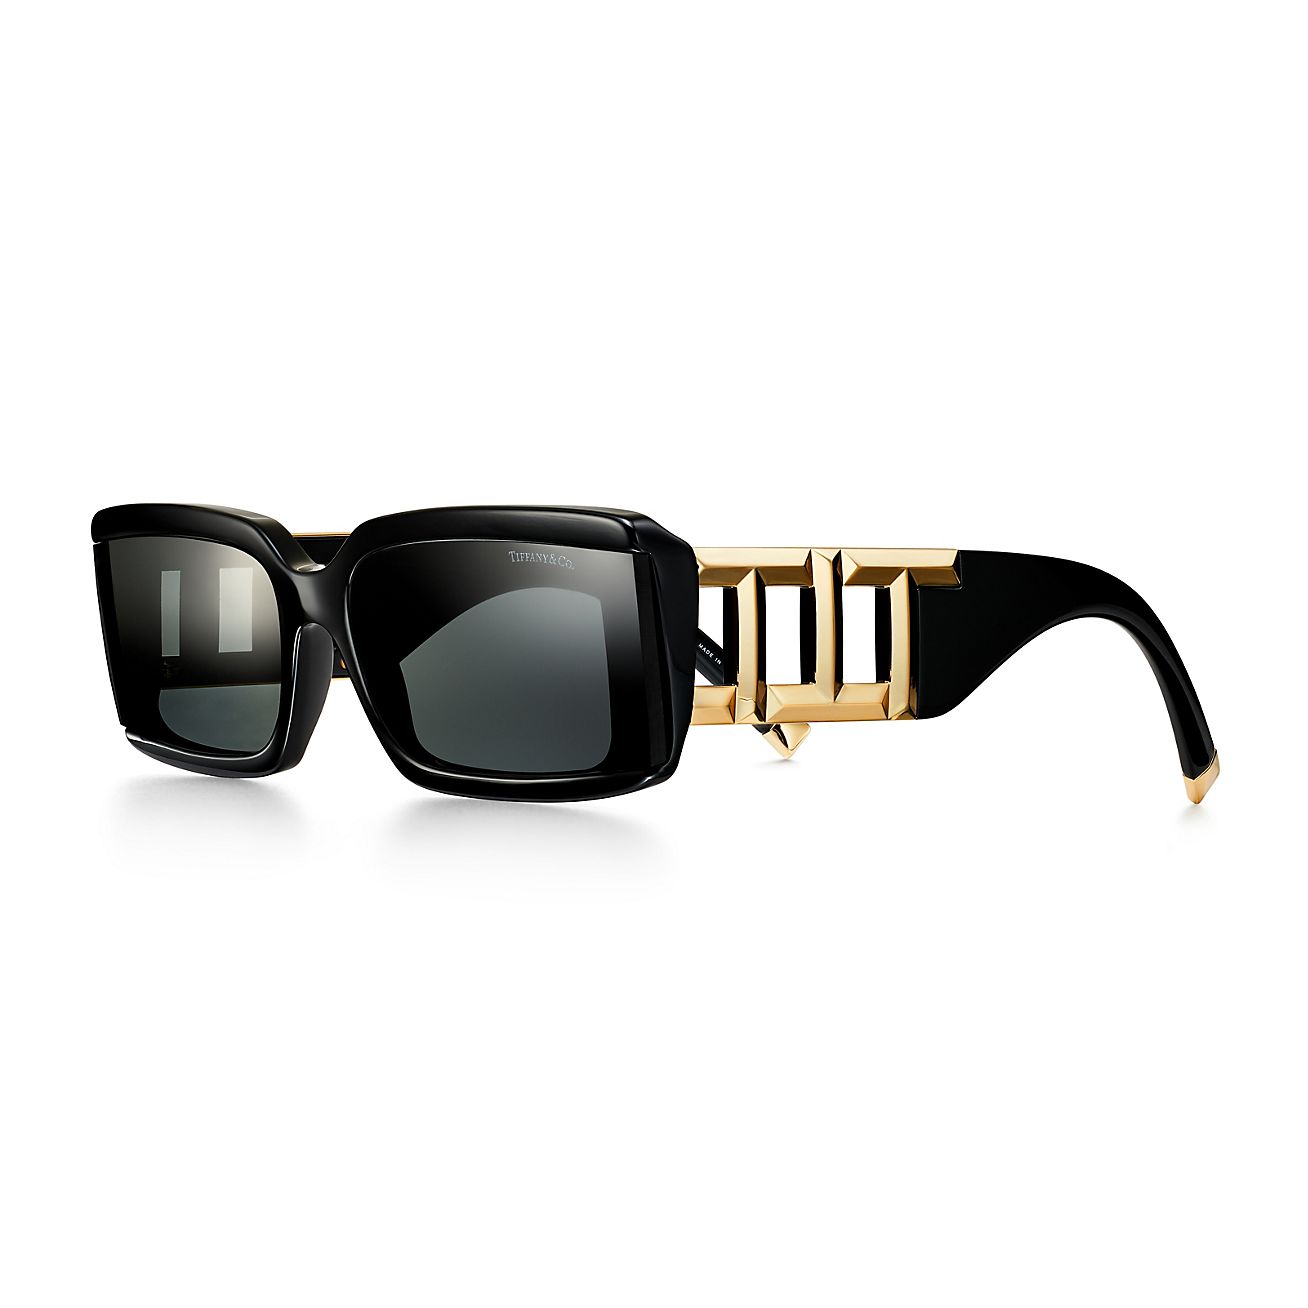 Buy Dark black and rust tinted flared sunglasses Online. – Odette-bdsngoinhaviet.com.vn